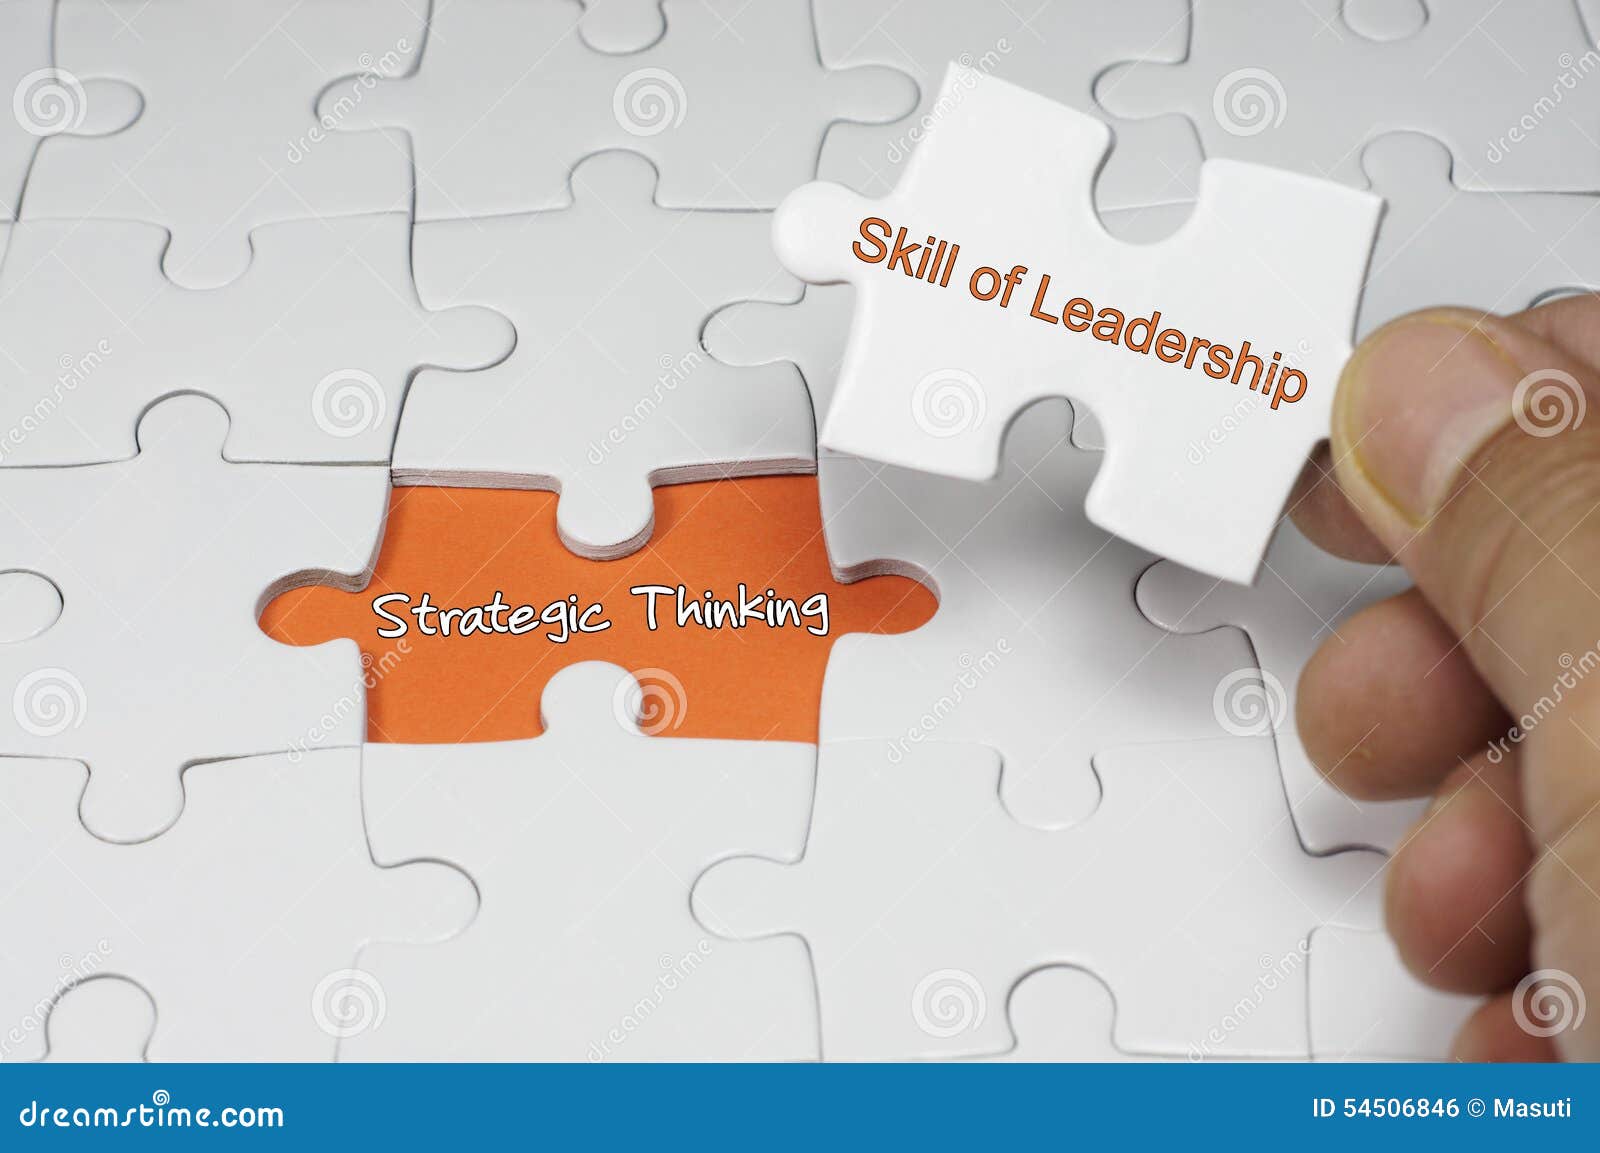 strategic thinking - leadership concept